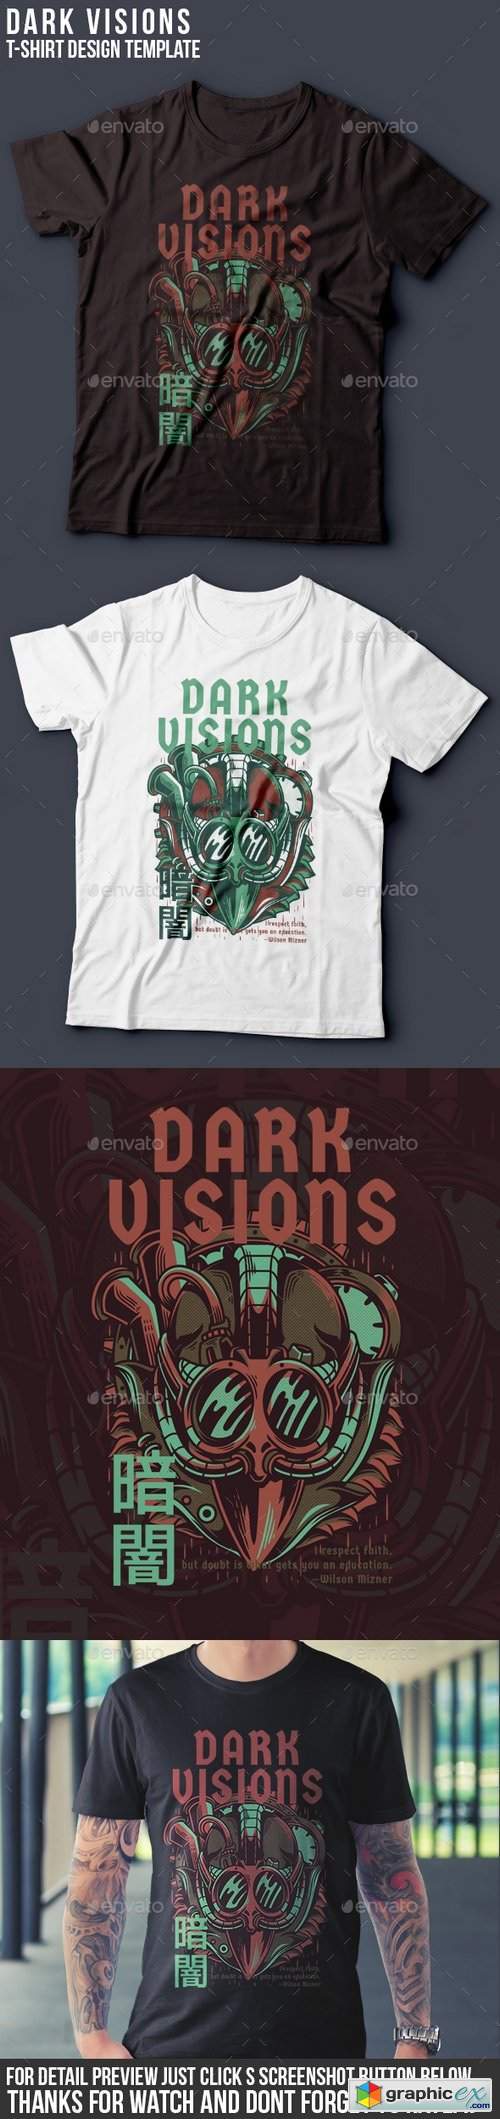 Dark Visions T-Shirt Design